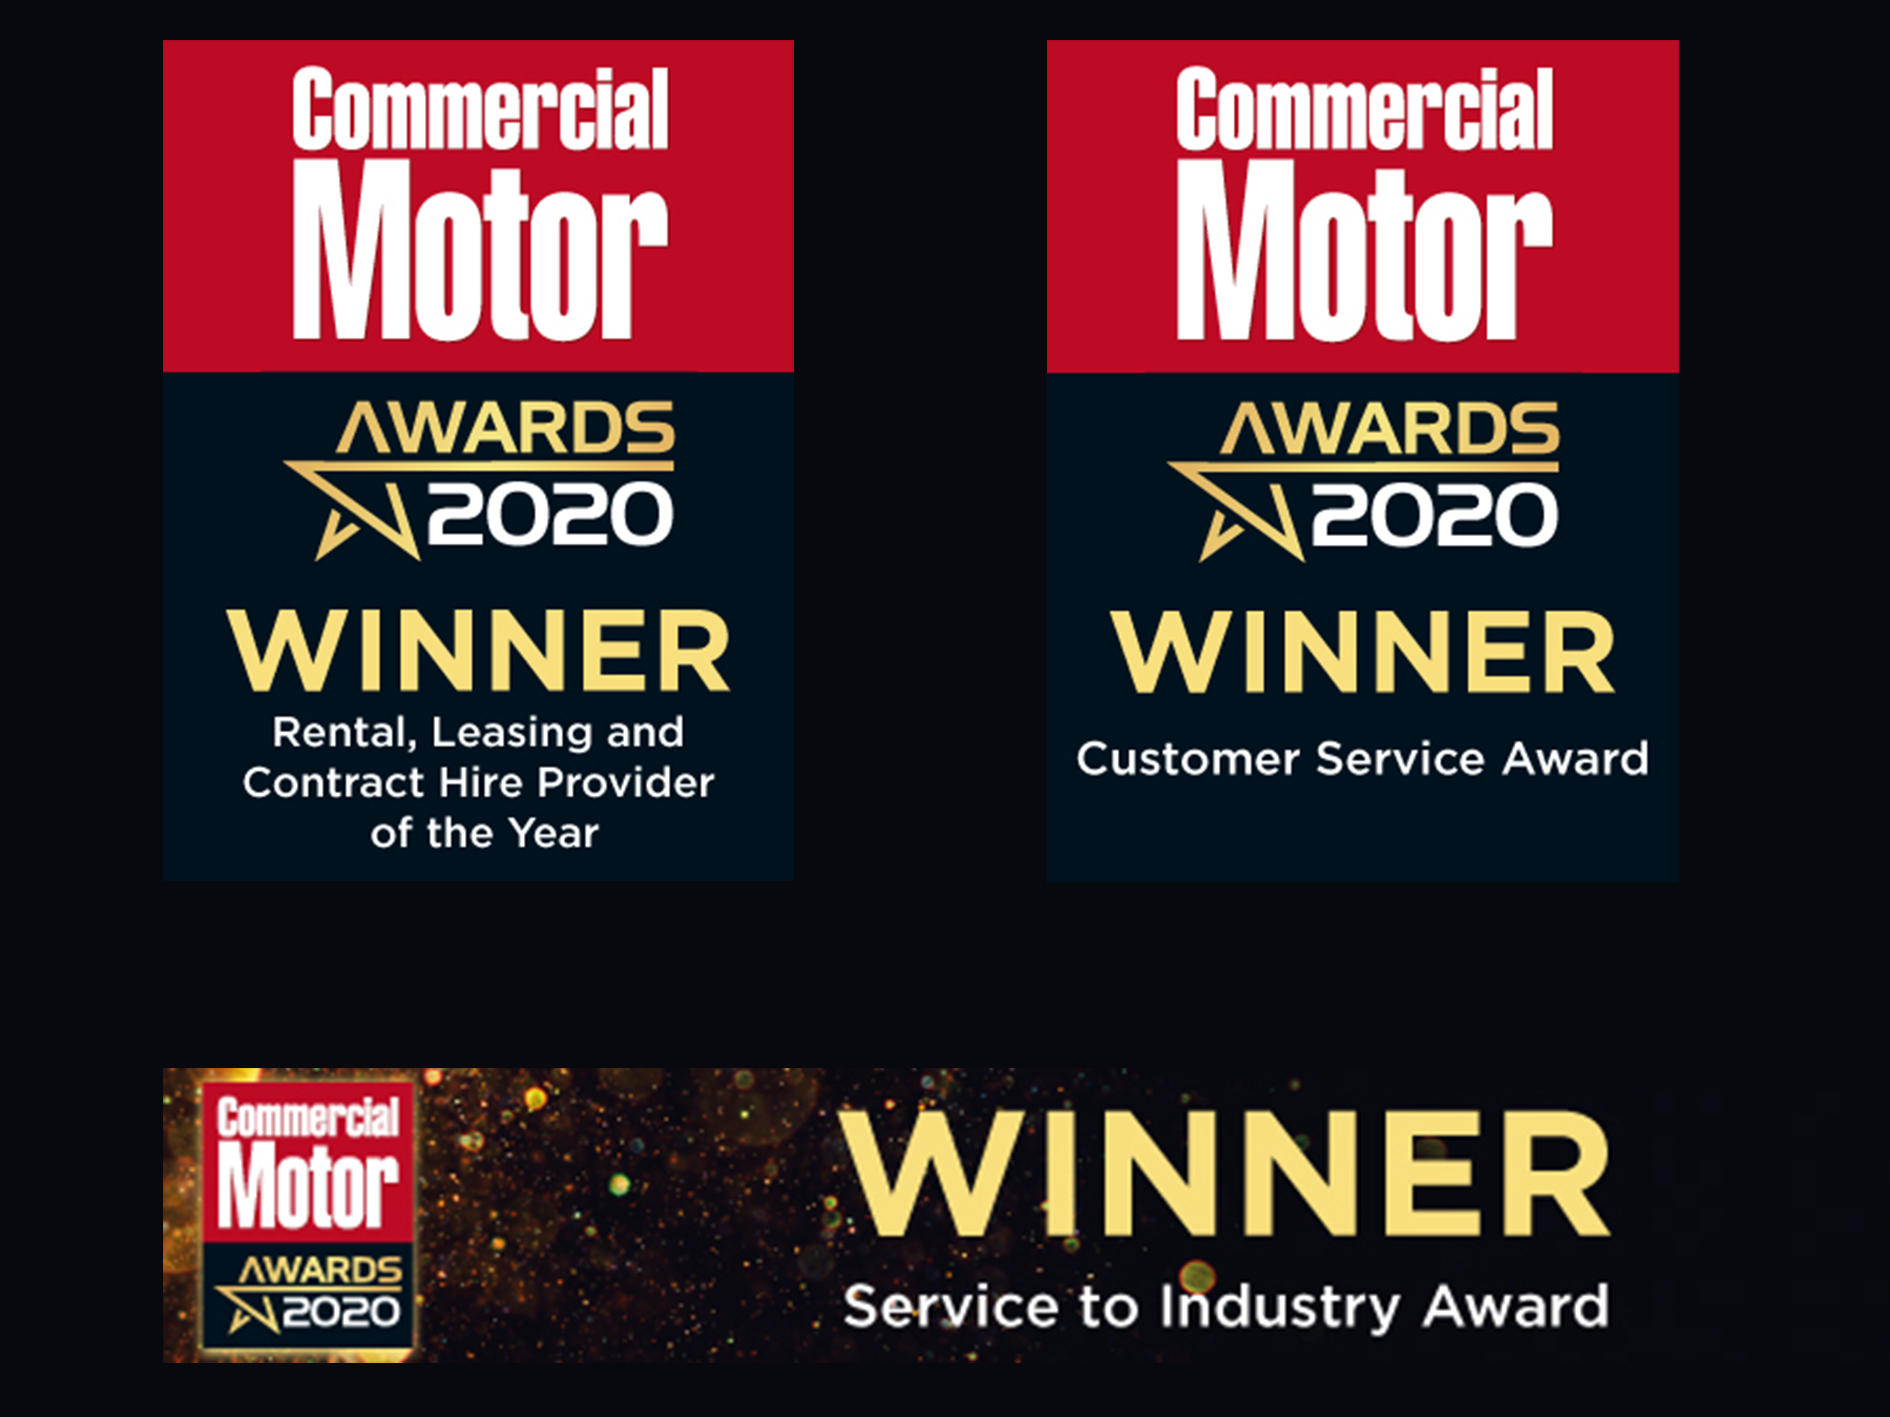 Commercial Motor Awards